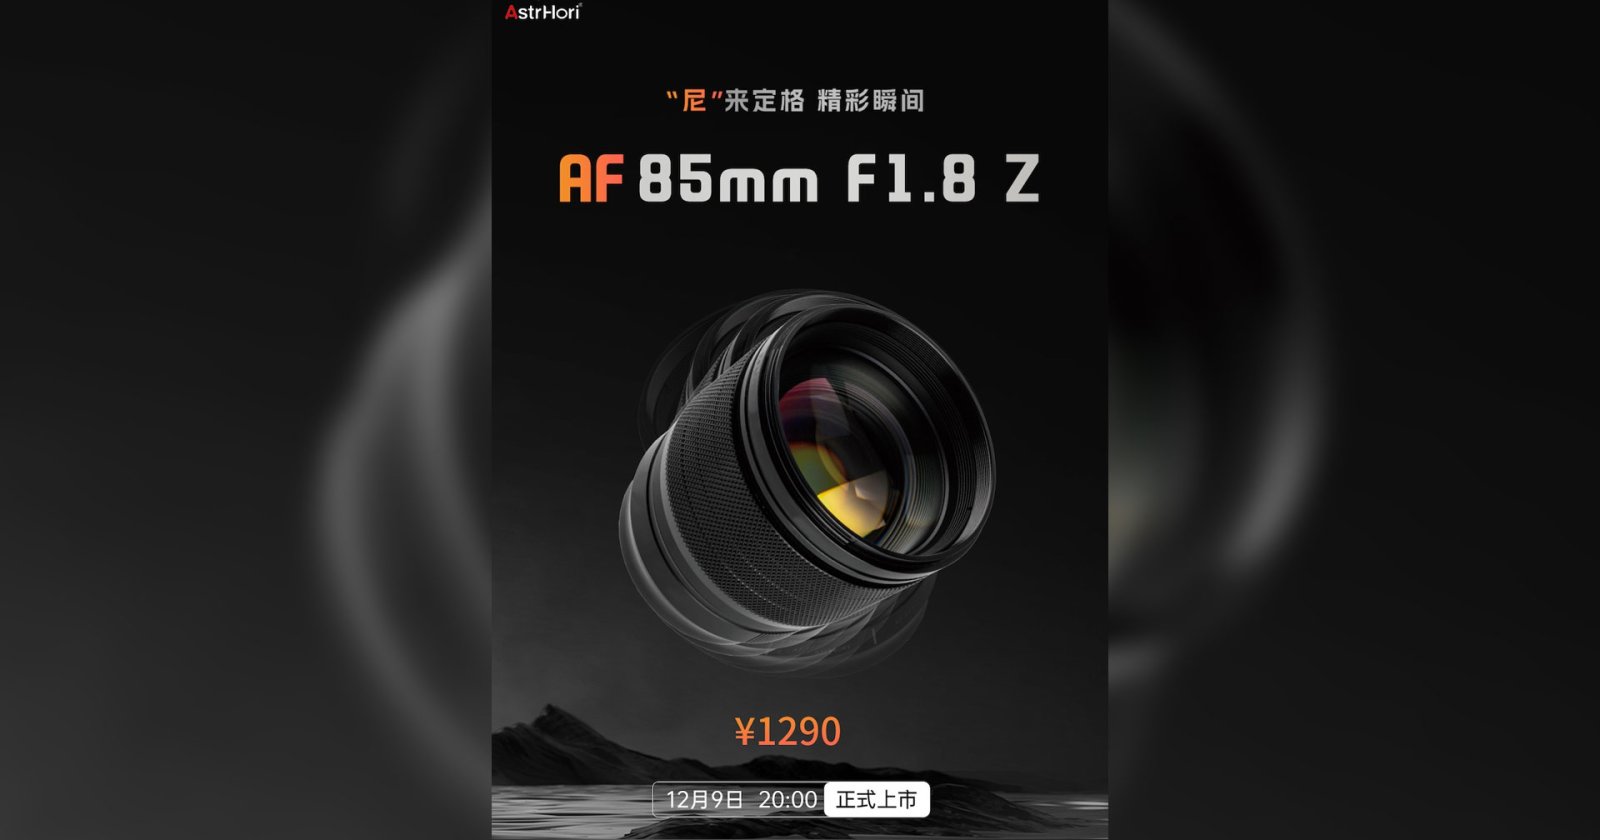 AstrHori AF 85mm F1.8 Z เลนส์ Portrait ราคาประหยัด เมาท์ Nikon Z เตรียมเปิดตัว 9 ธันวาคม